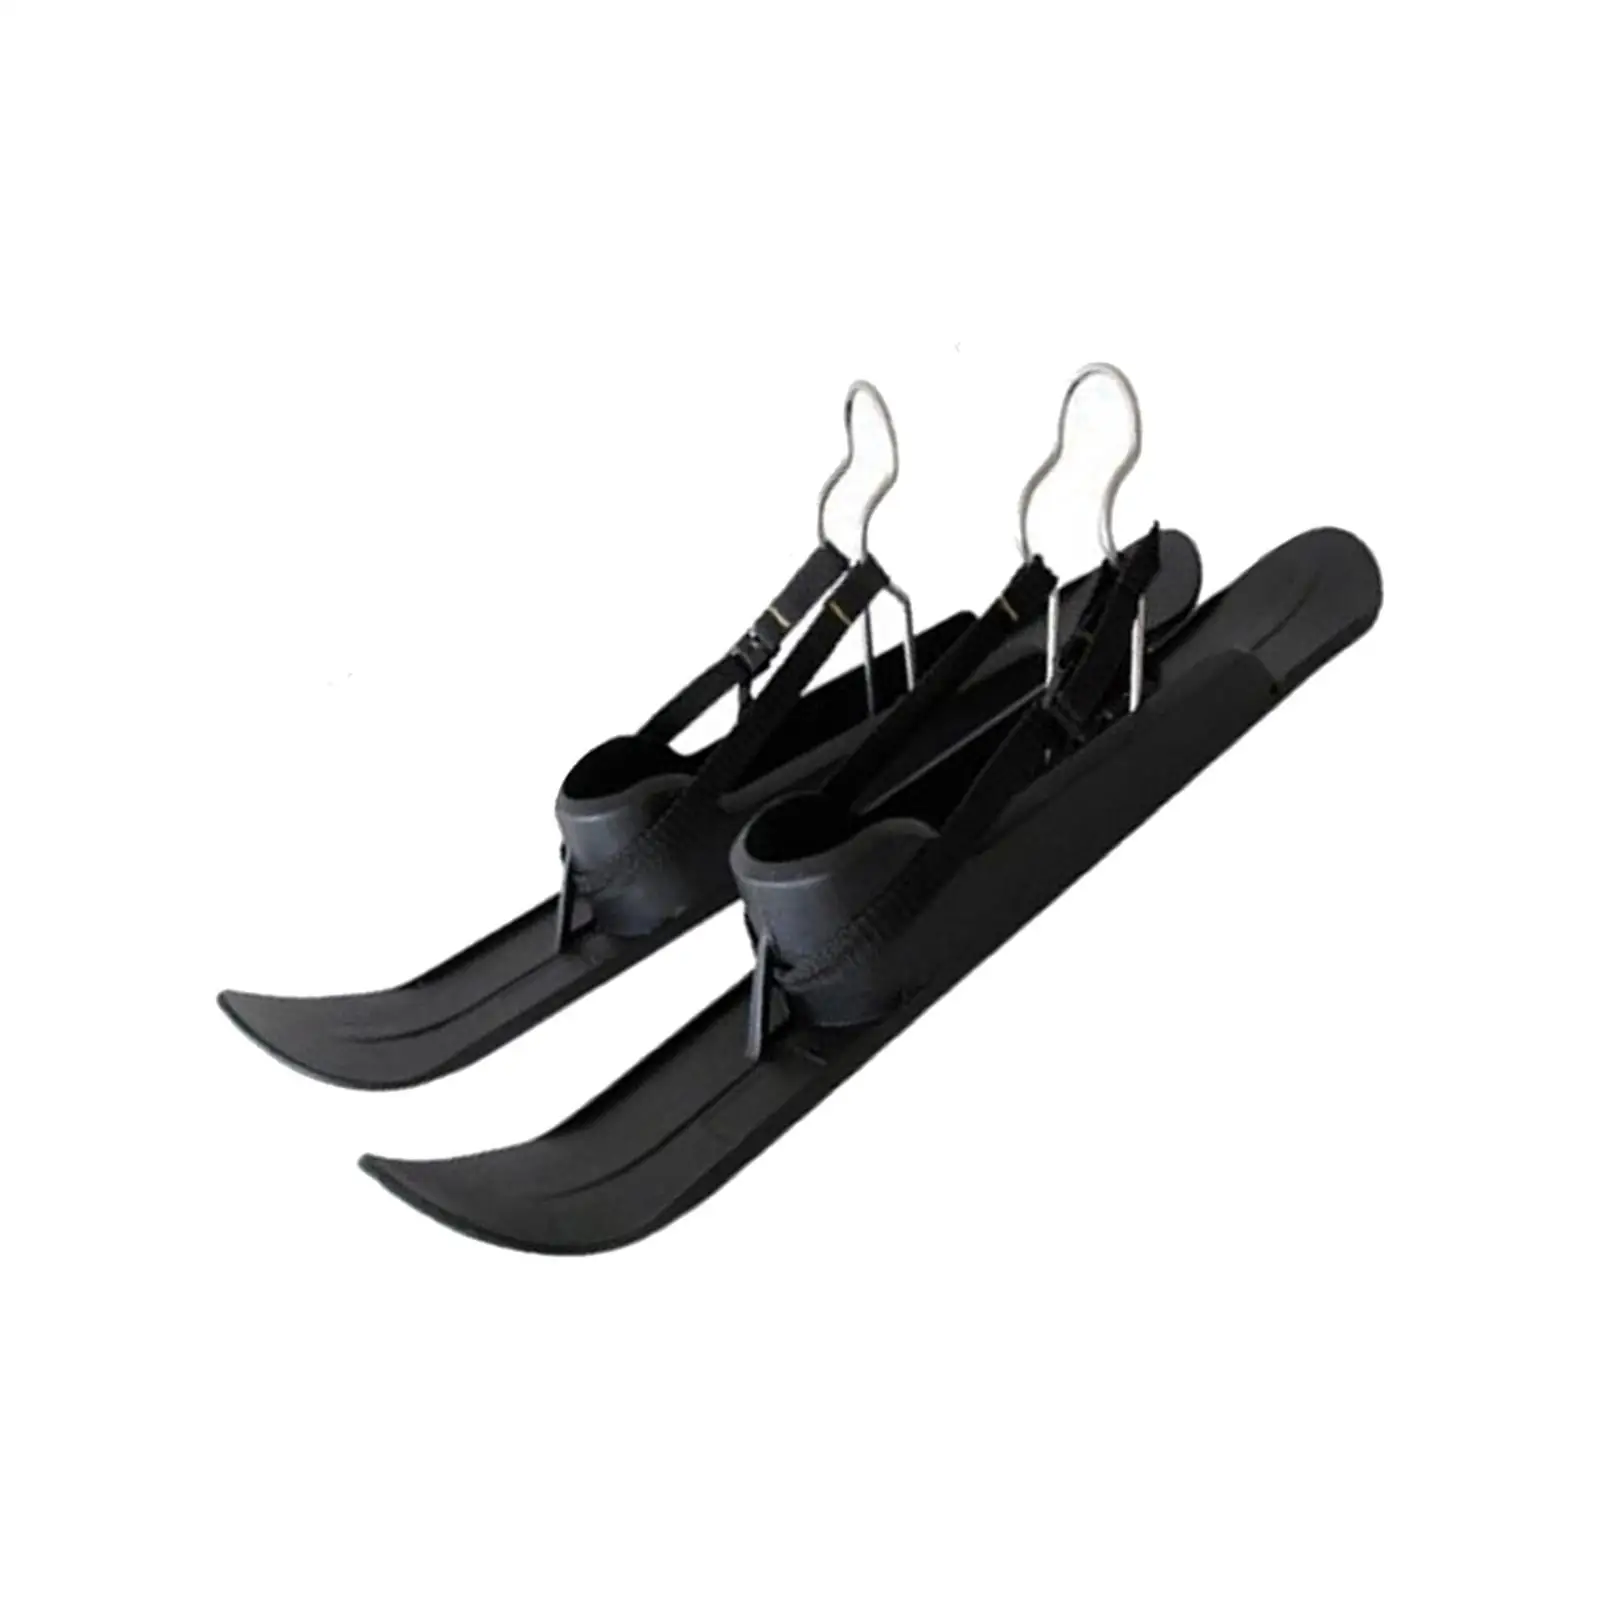 Snow Sledge Board Glider Sled Skiing Board Ski Plate for Stroller